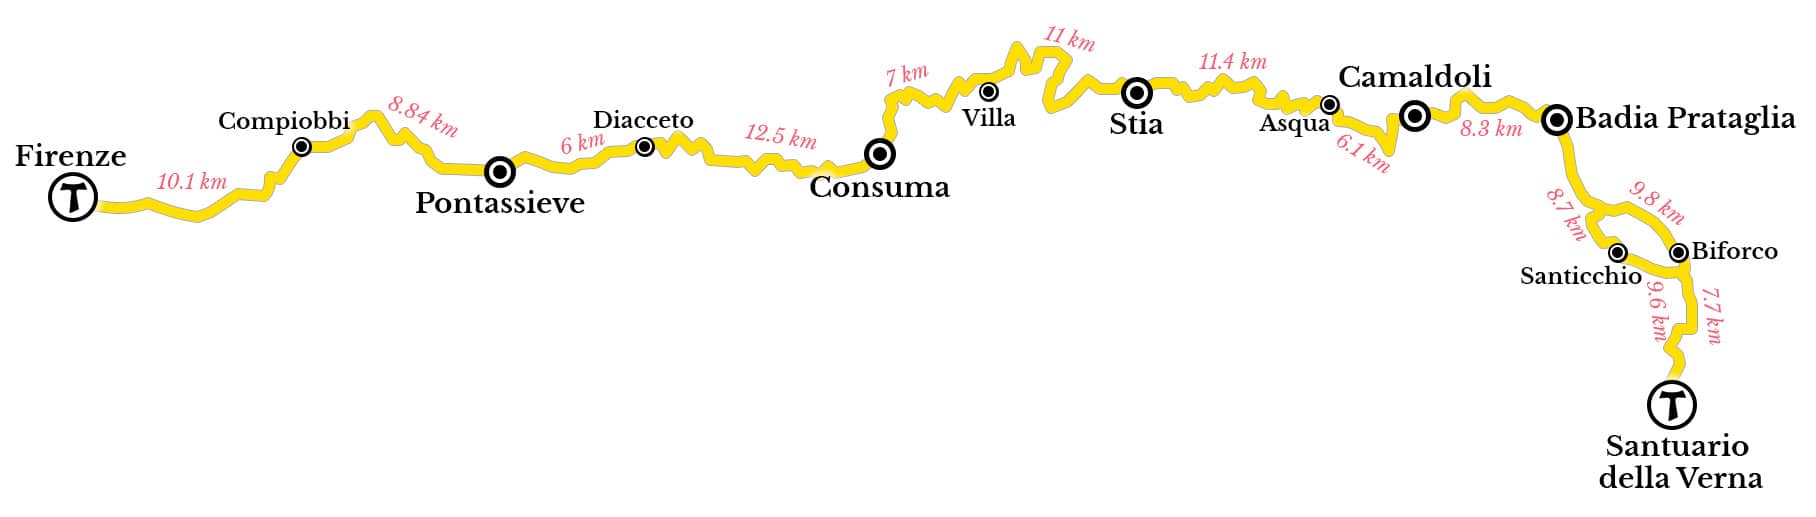 Via di Francesco Firenze - La Verna Map Route